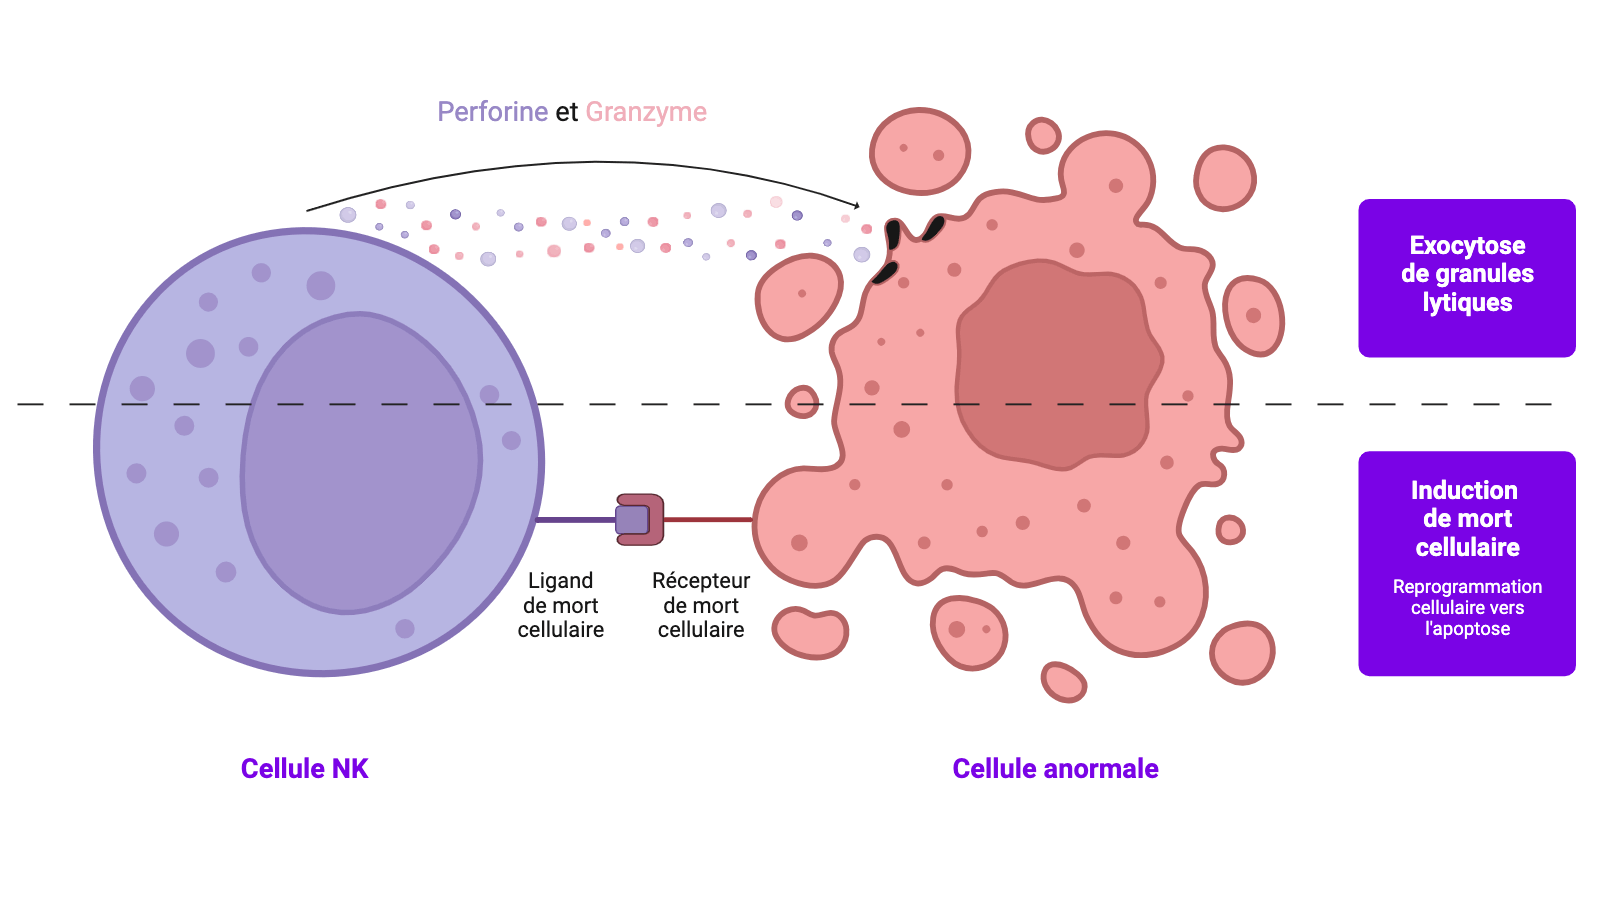 Cytotoxicite cellules NK